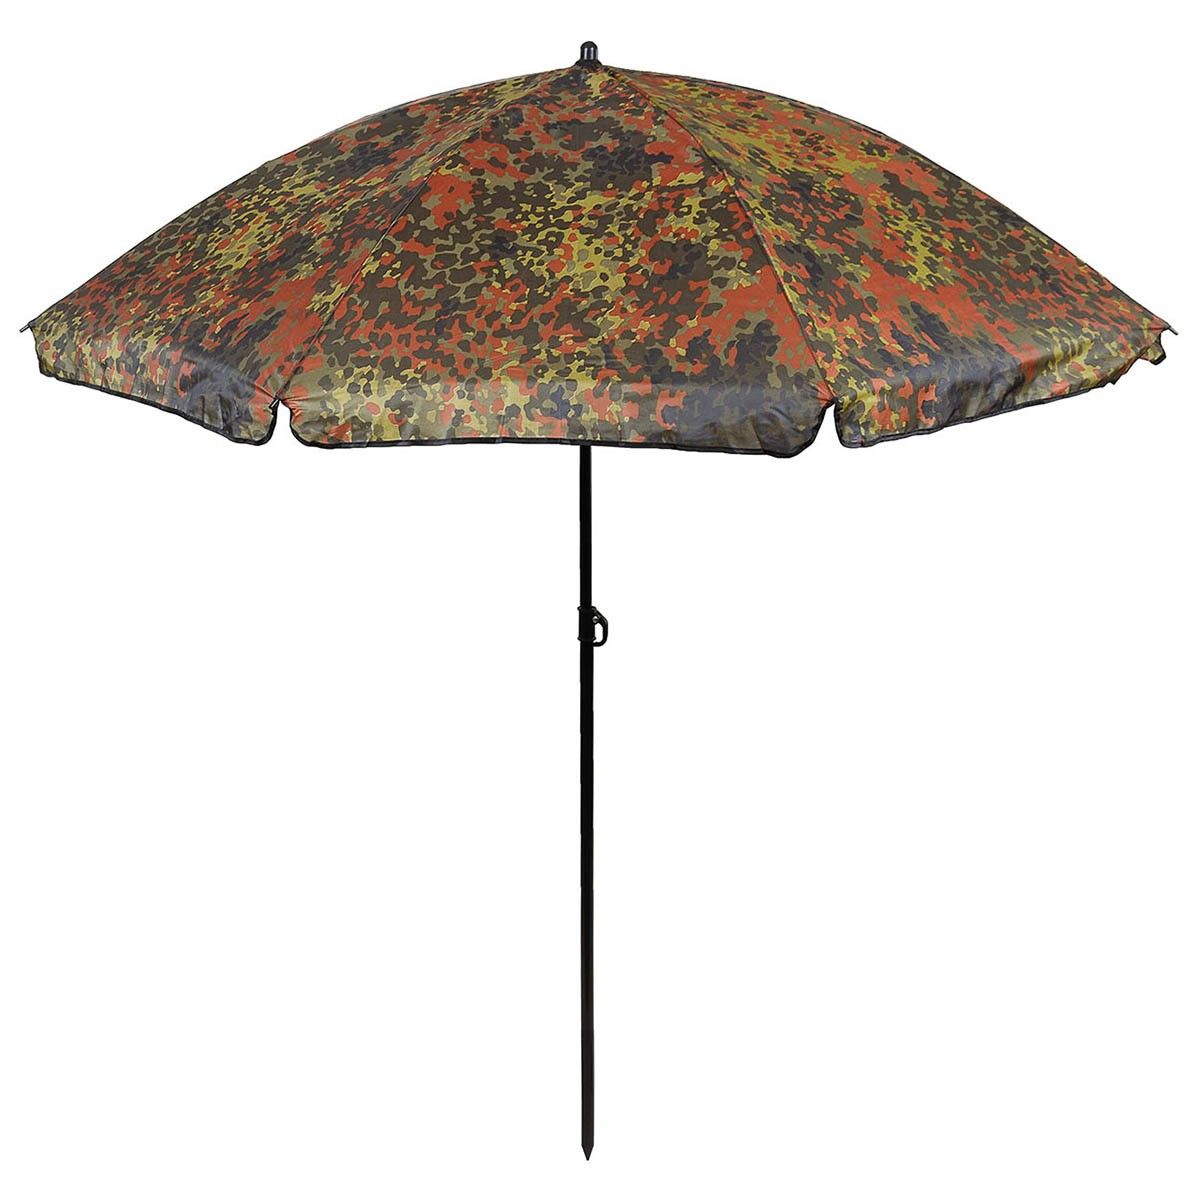 parasol flecktarn 180 cm średnicy